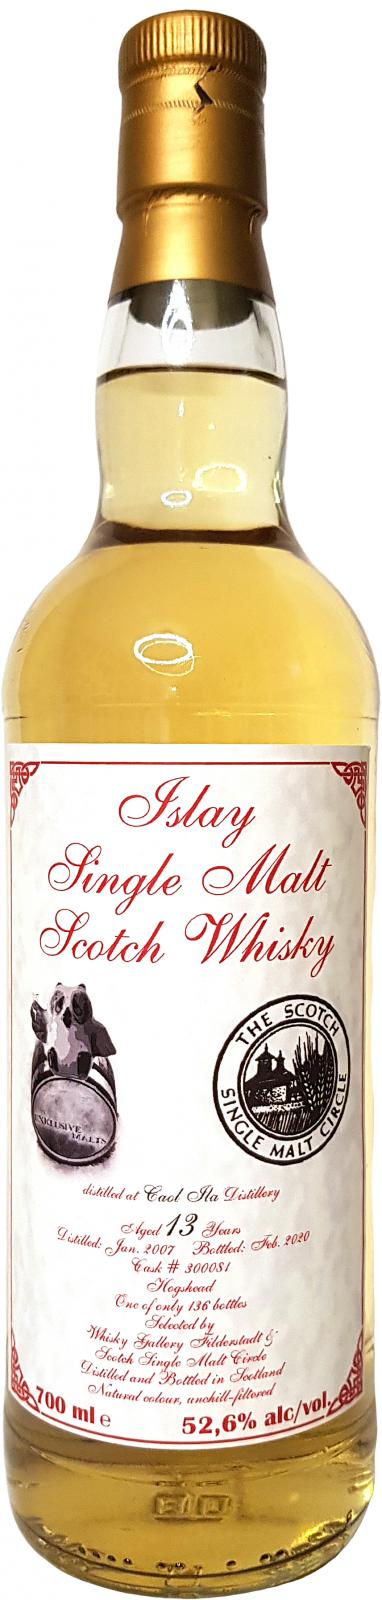 Caol Ila 2007 MC Islay Single Malt Scotch Whisky #300081 52.6% 700ml